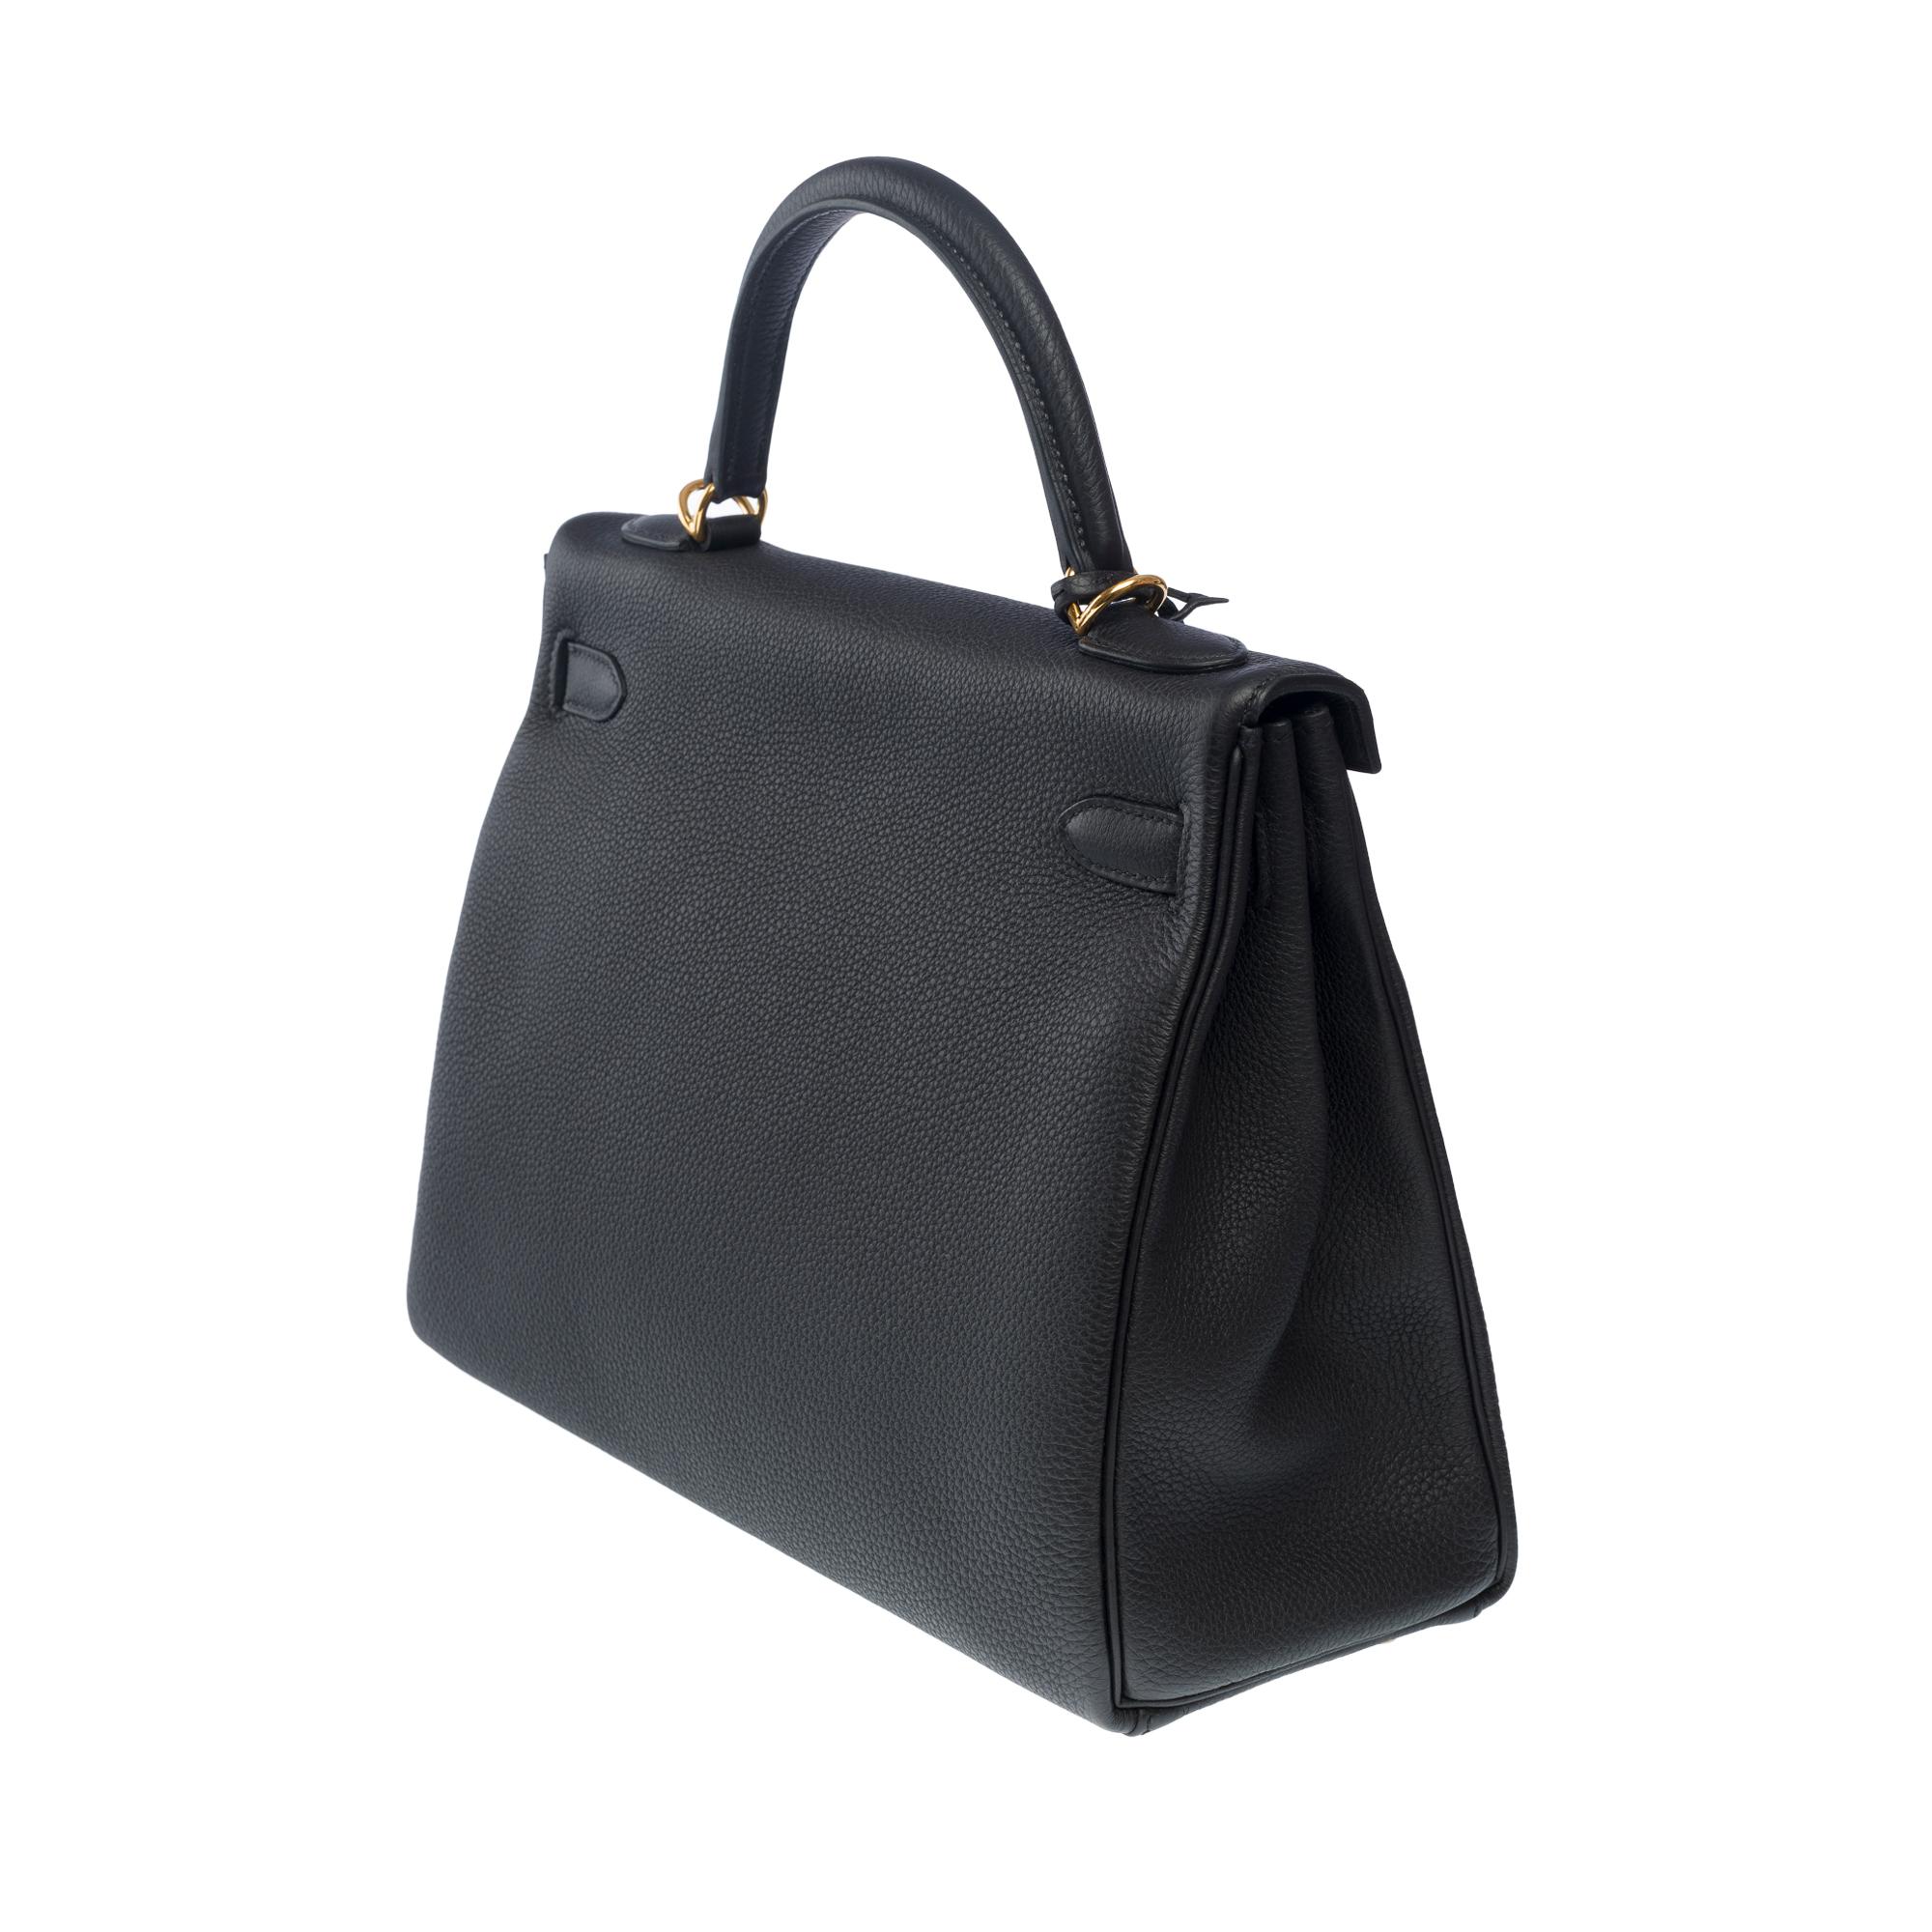 New Hermès Kelly 32 retourne handbag strap in Black Togo leather, GHW 2